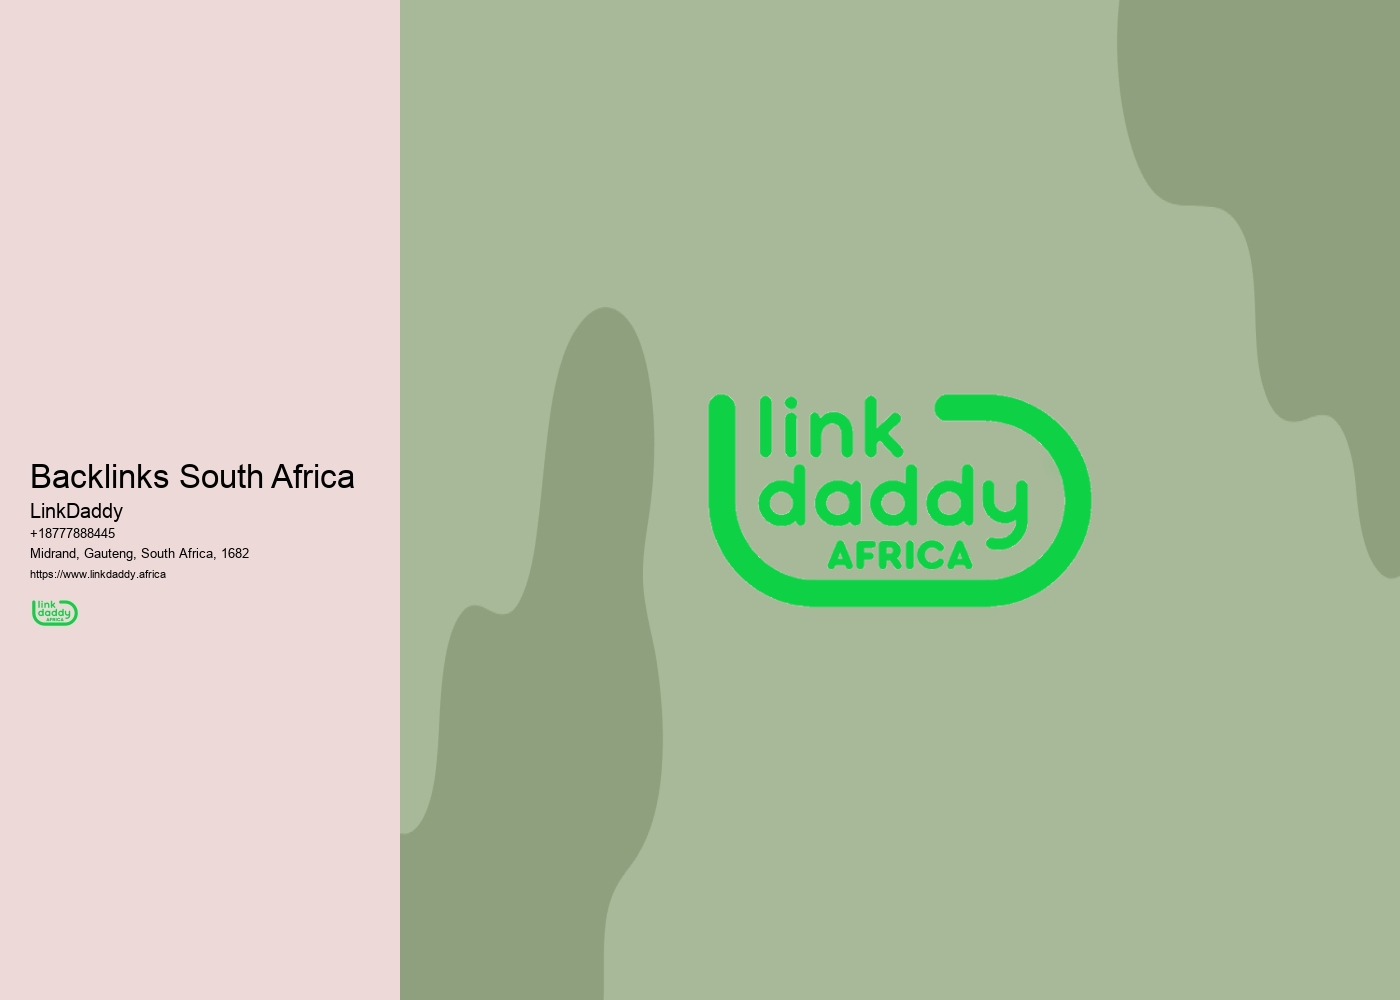 Backlinks South Africa